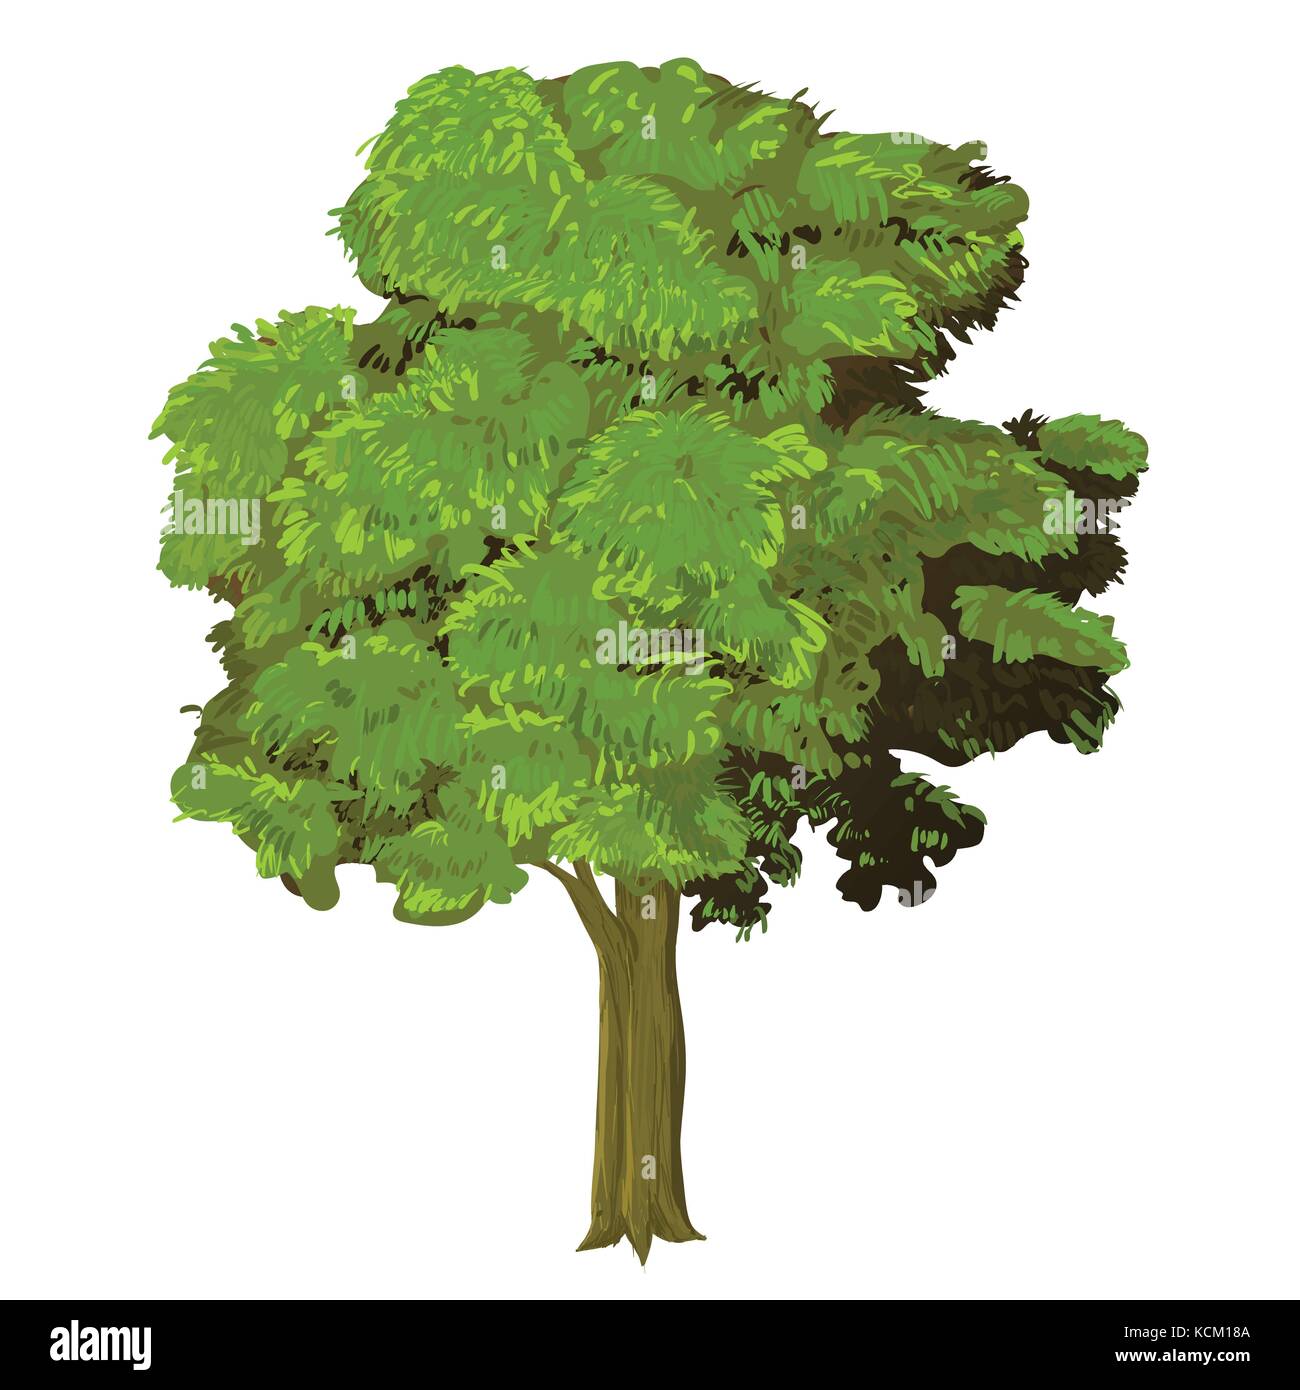 Abbildung: Green Tree natürlichen Pflanze grün Blatt Baum Natur Umwelt grüne Bäume organische spring Forest Garden abstrakte Holz park-Vektor illus Stock Vektor